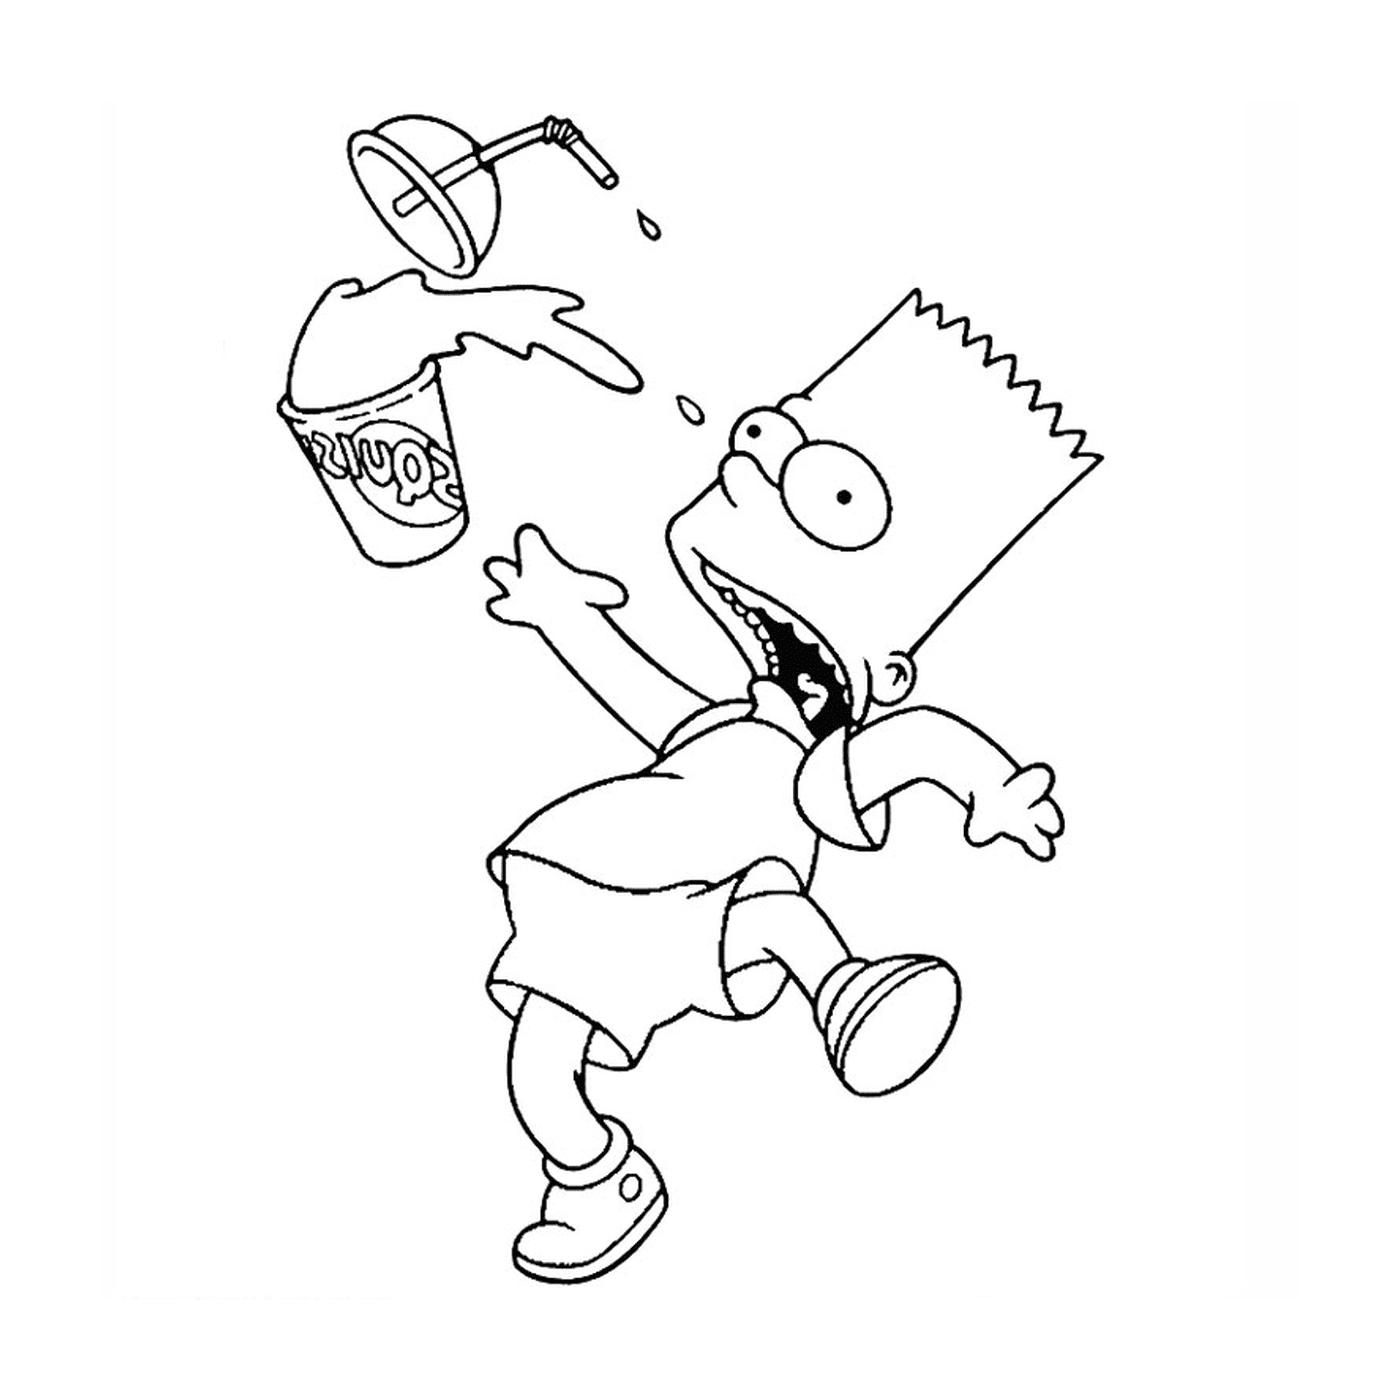  Bart Simpson's malignant 